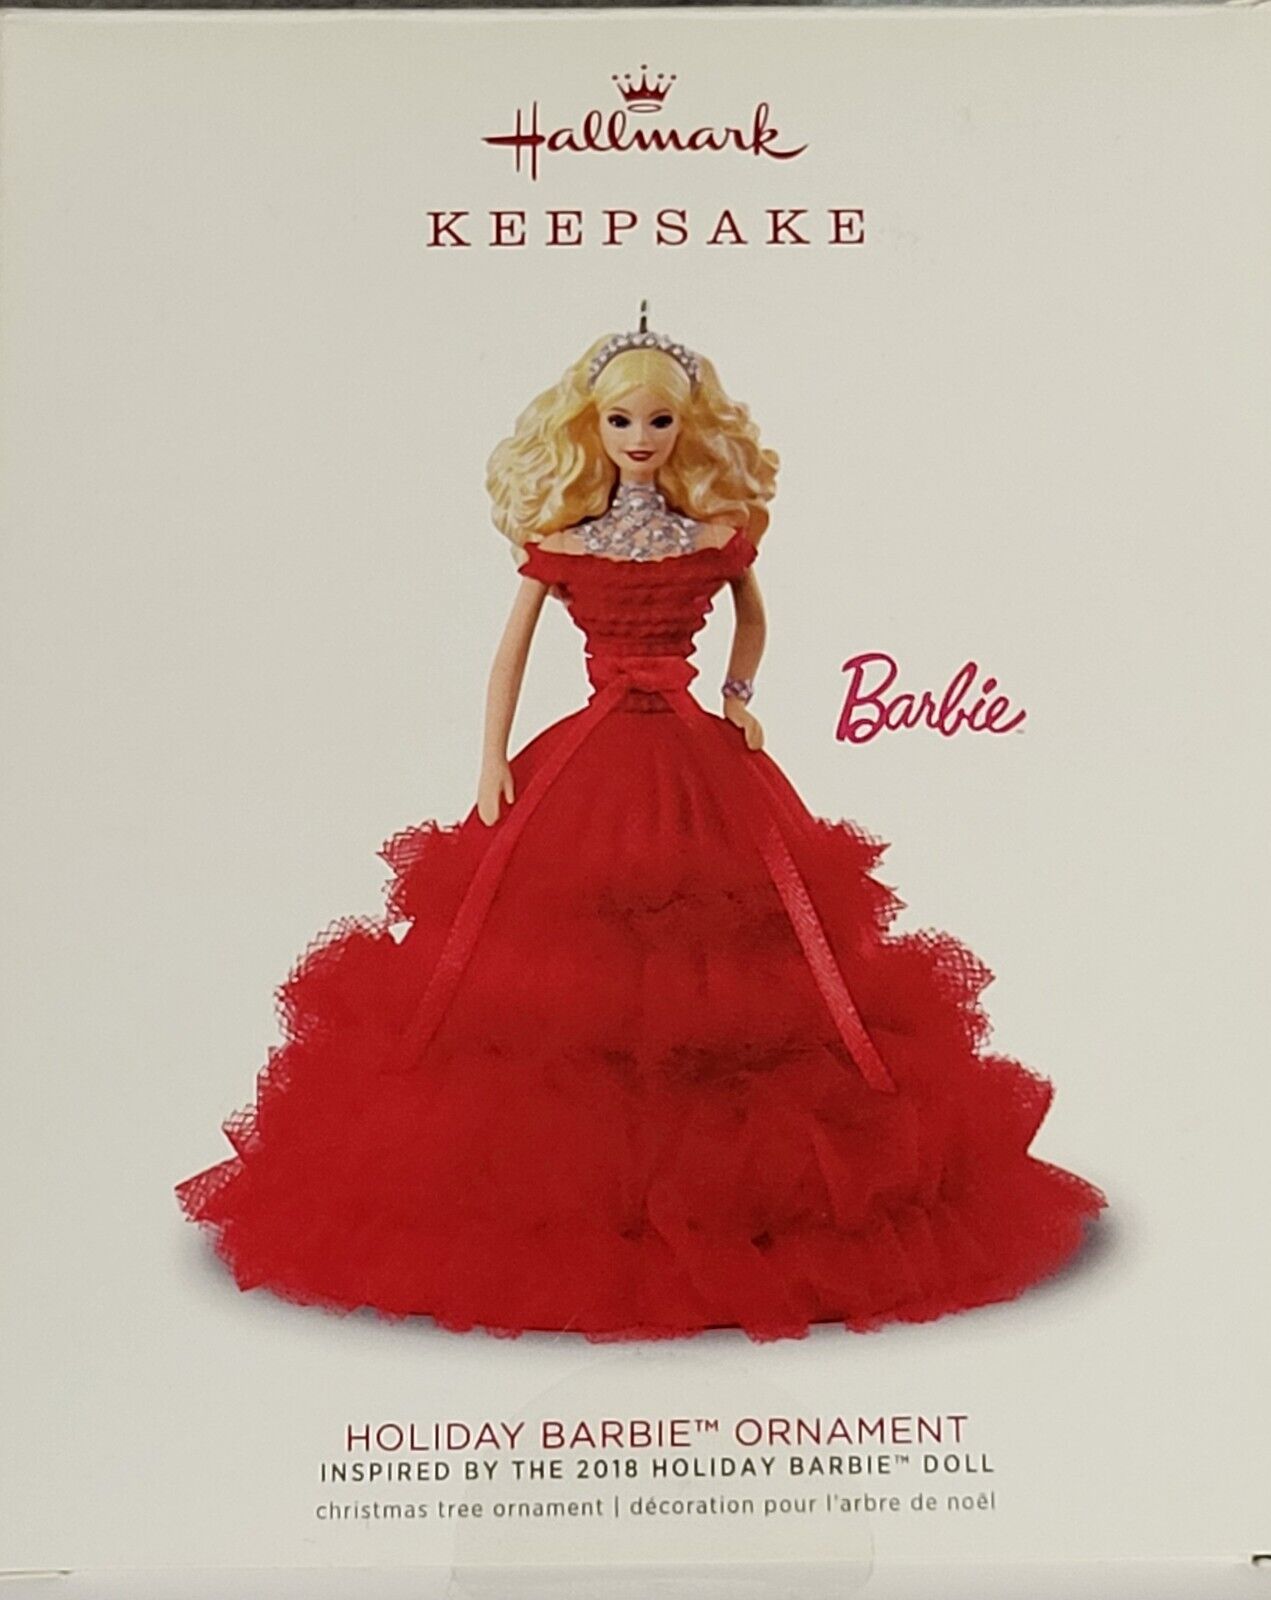 Hallmark Keepsake Ornament 2018 Holiday Barbie #4 In Series Red Dress Blond Hair